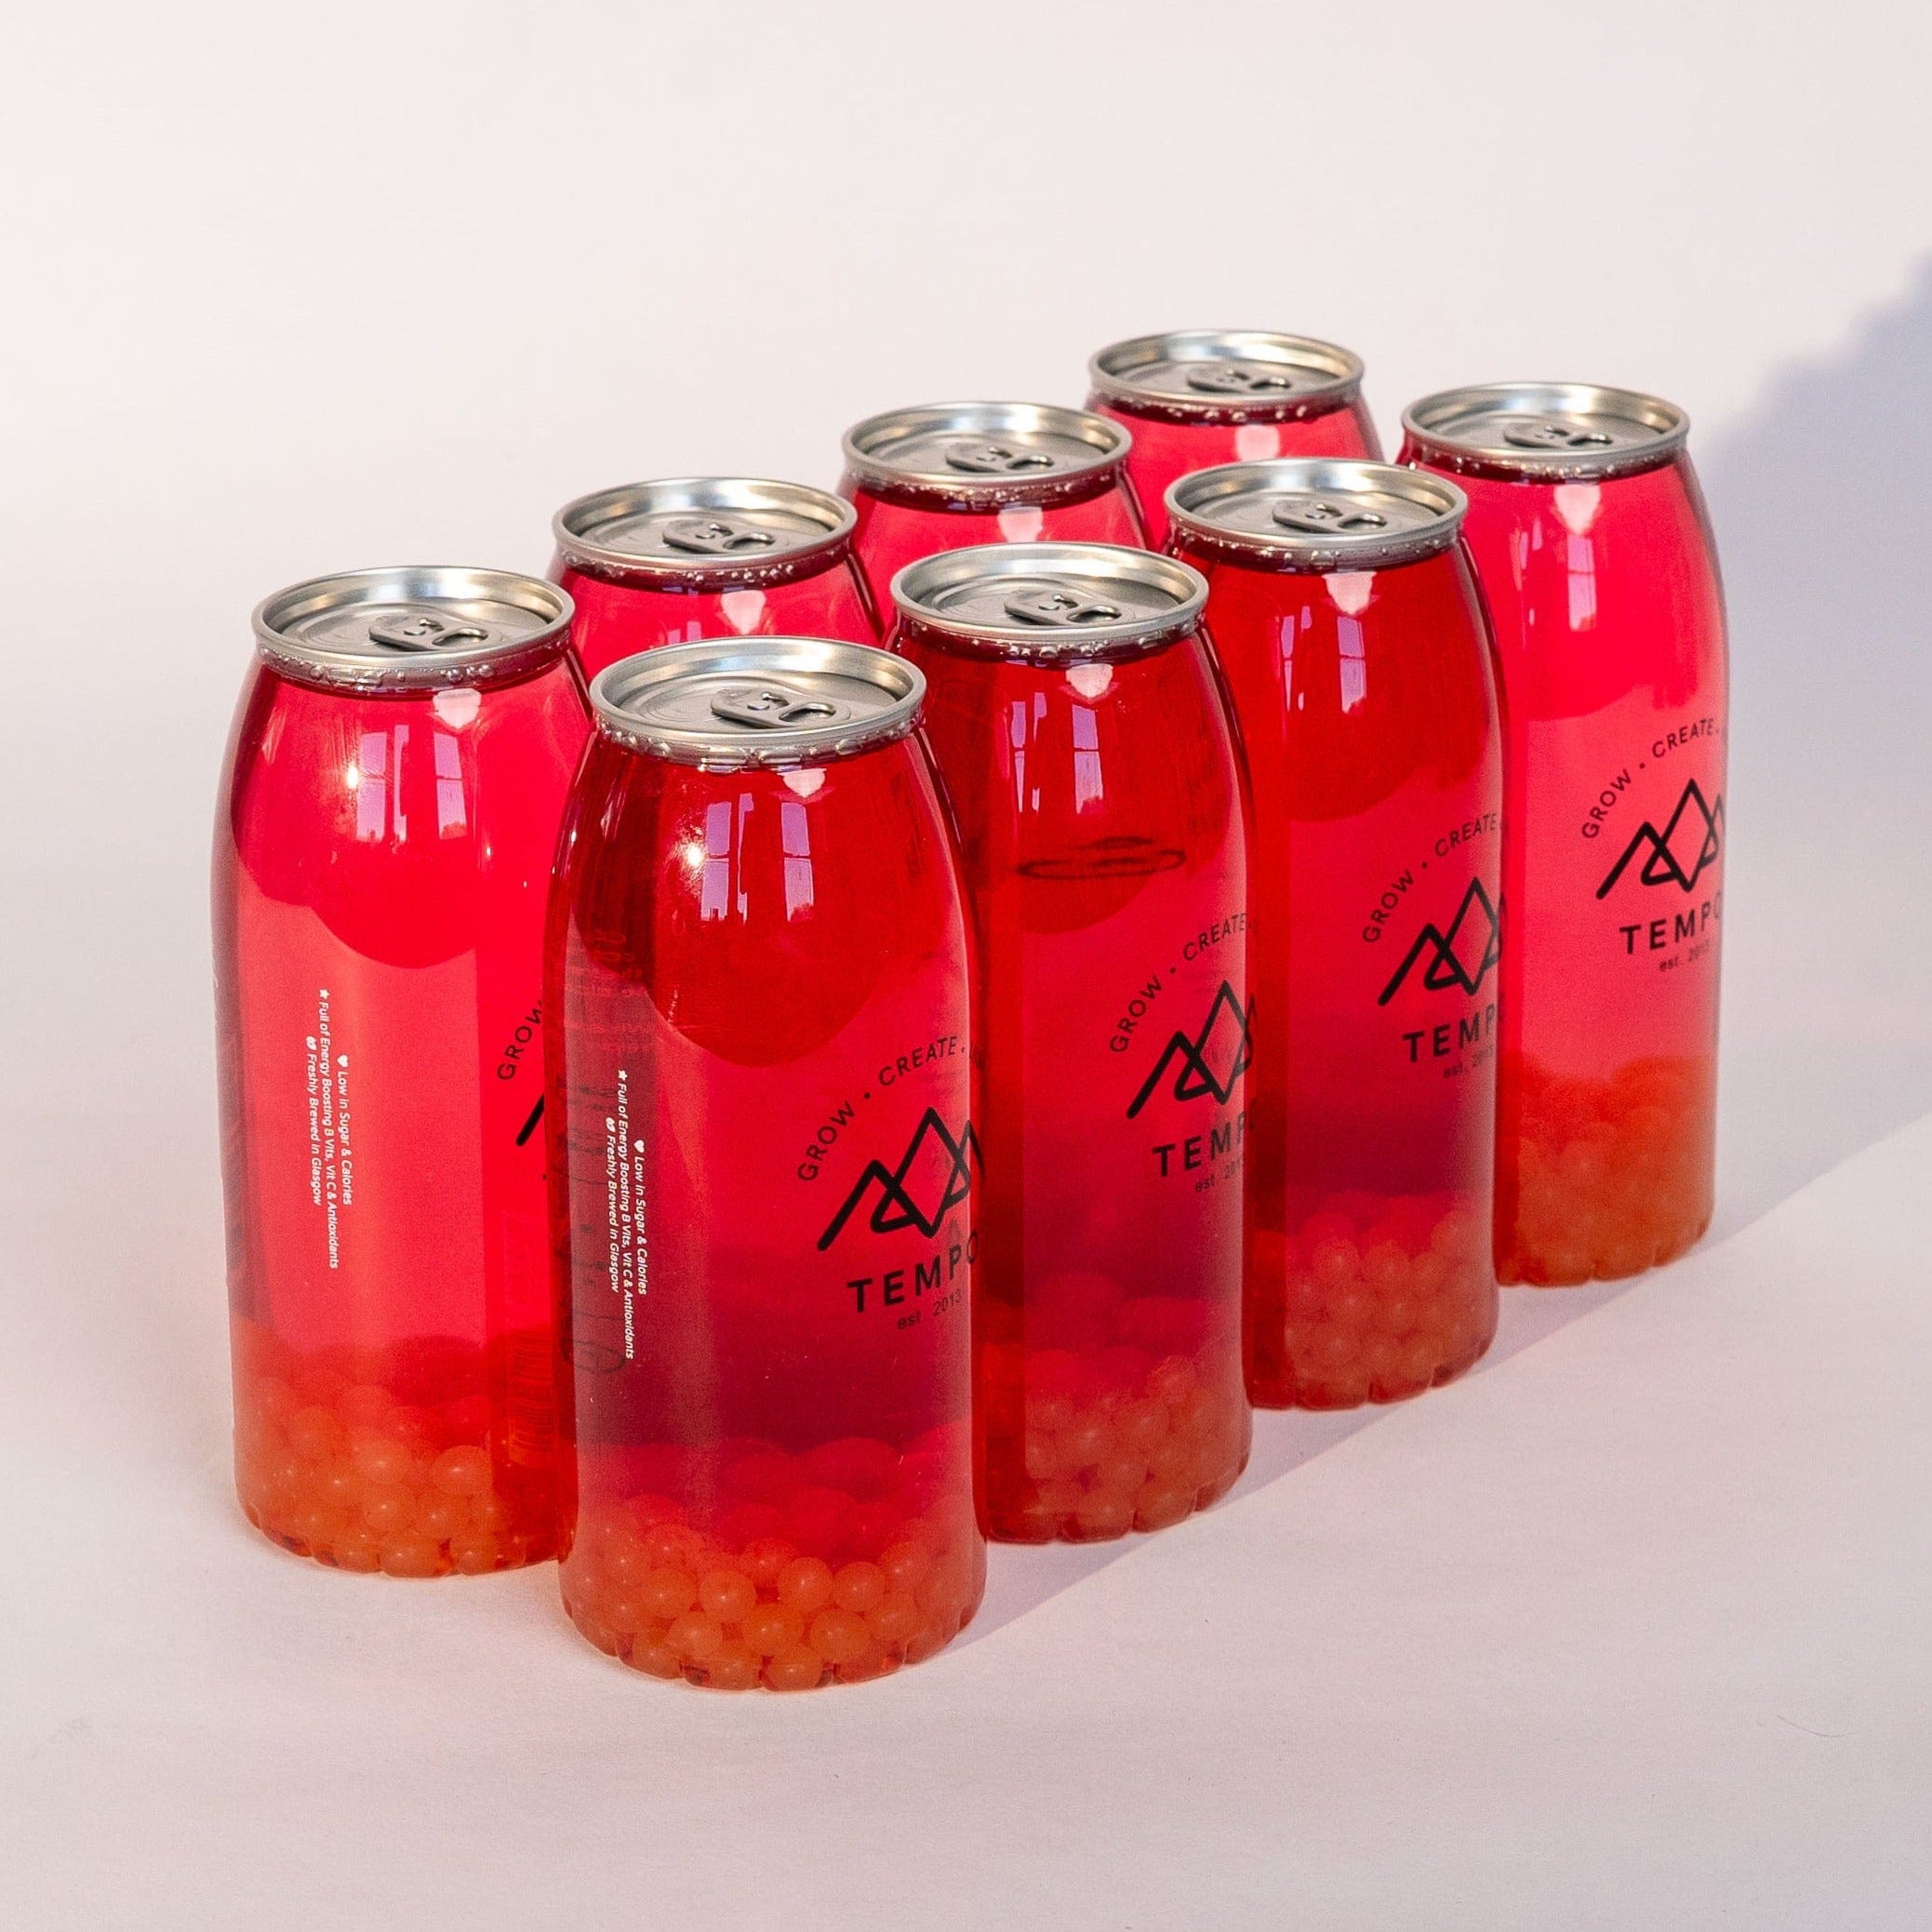 Tempo Tea Bar Bubble Tea Cans Red Reviver (Strawberry w/ Mango) Bubble Tea Cans Subscription Box - 8 Pack